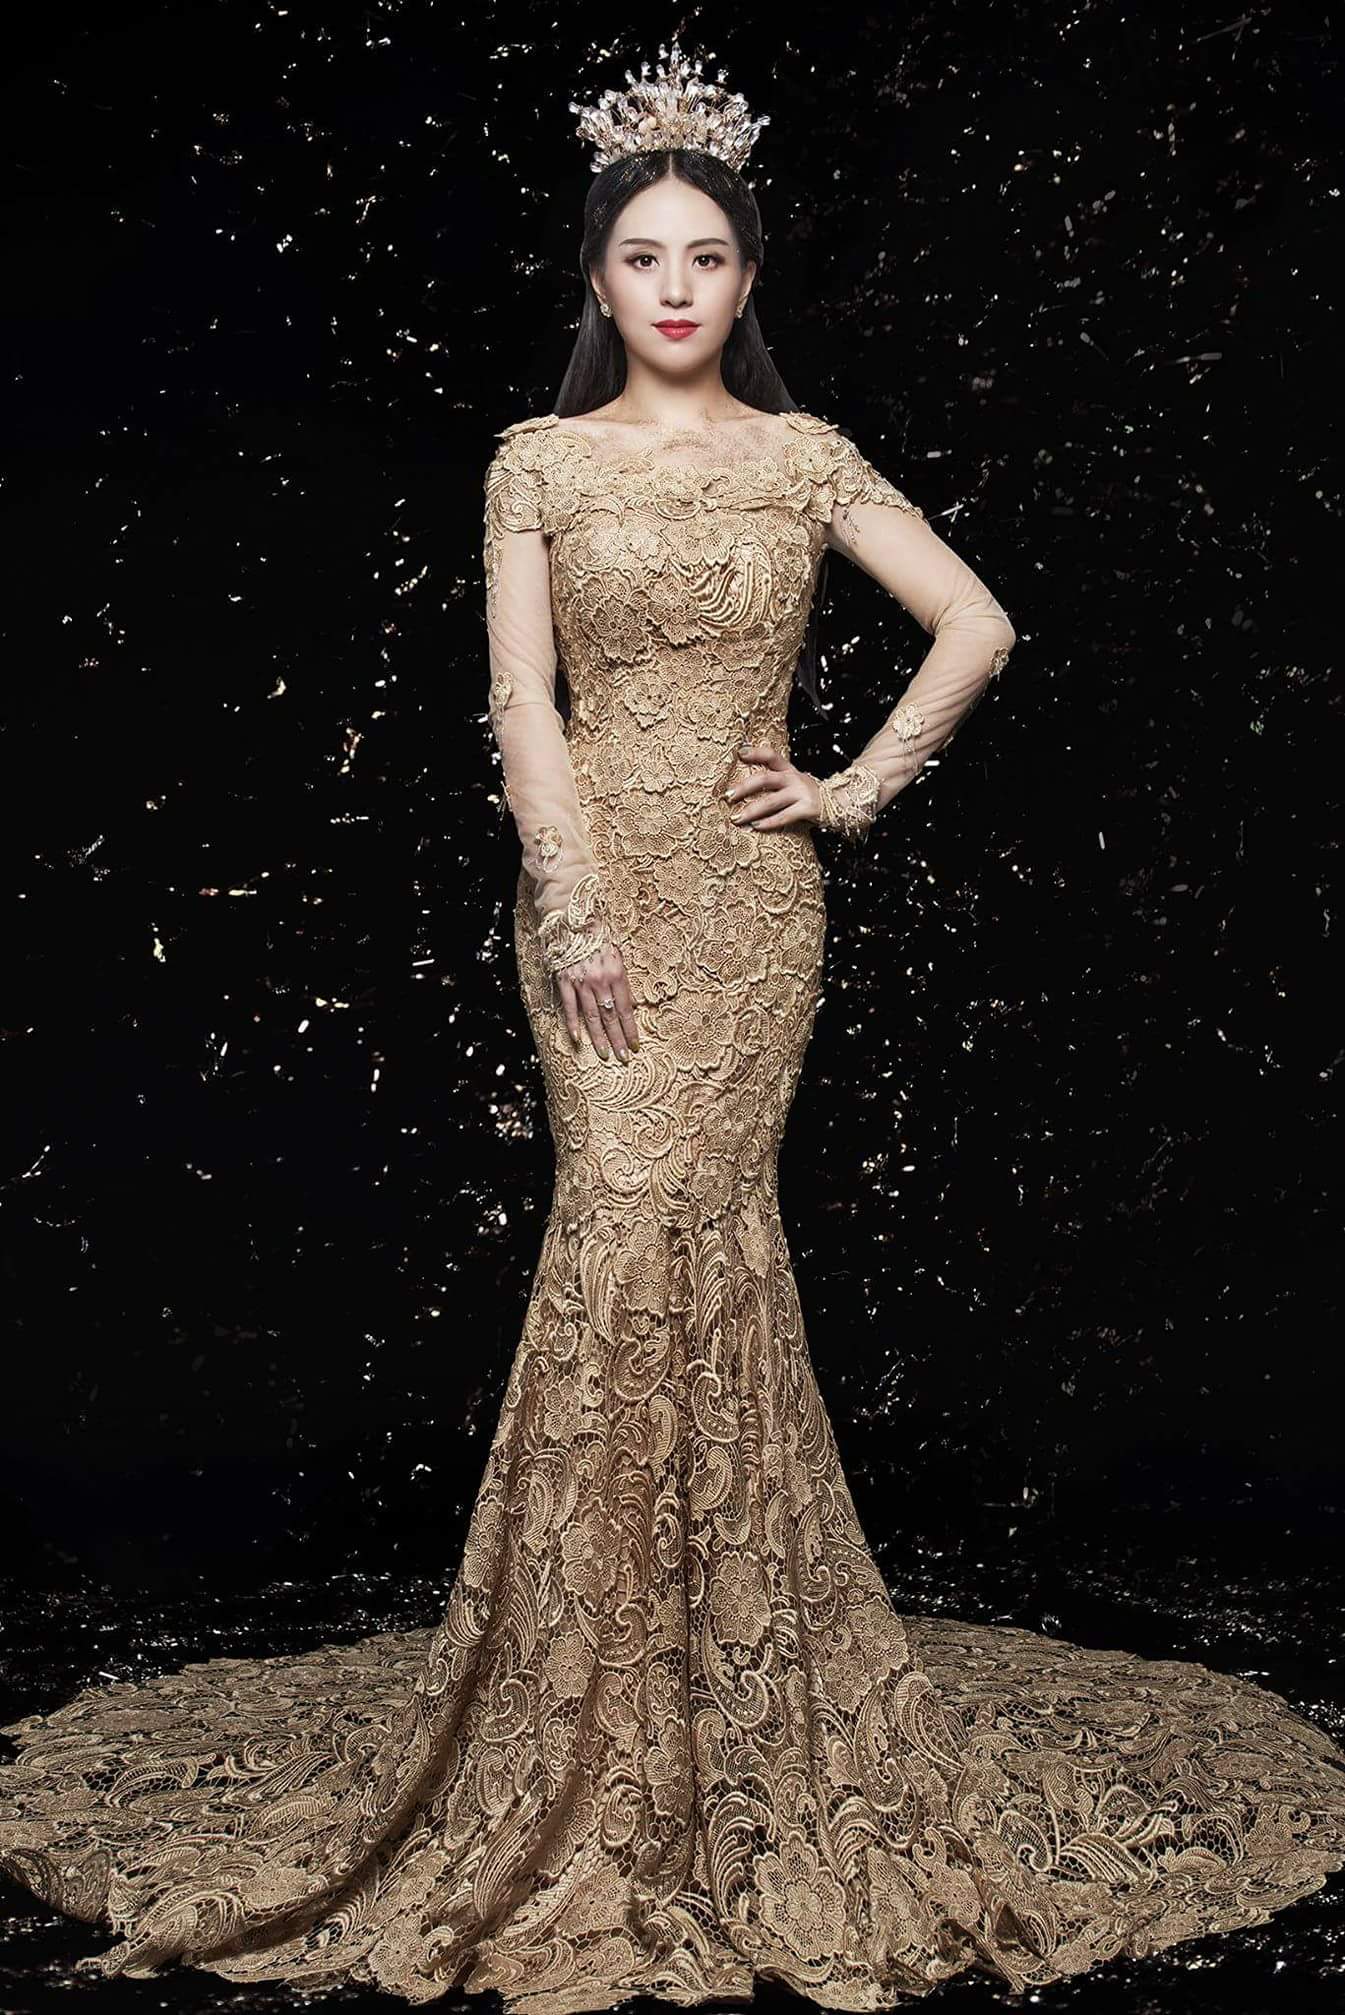 Jennifer Zhang as Miss China Wearing Her Crown